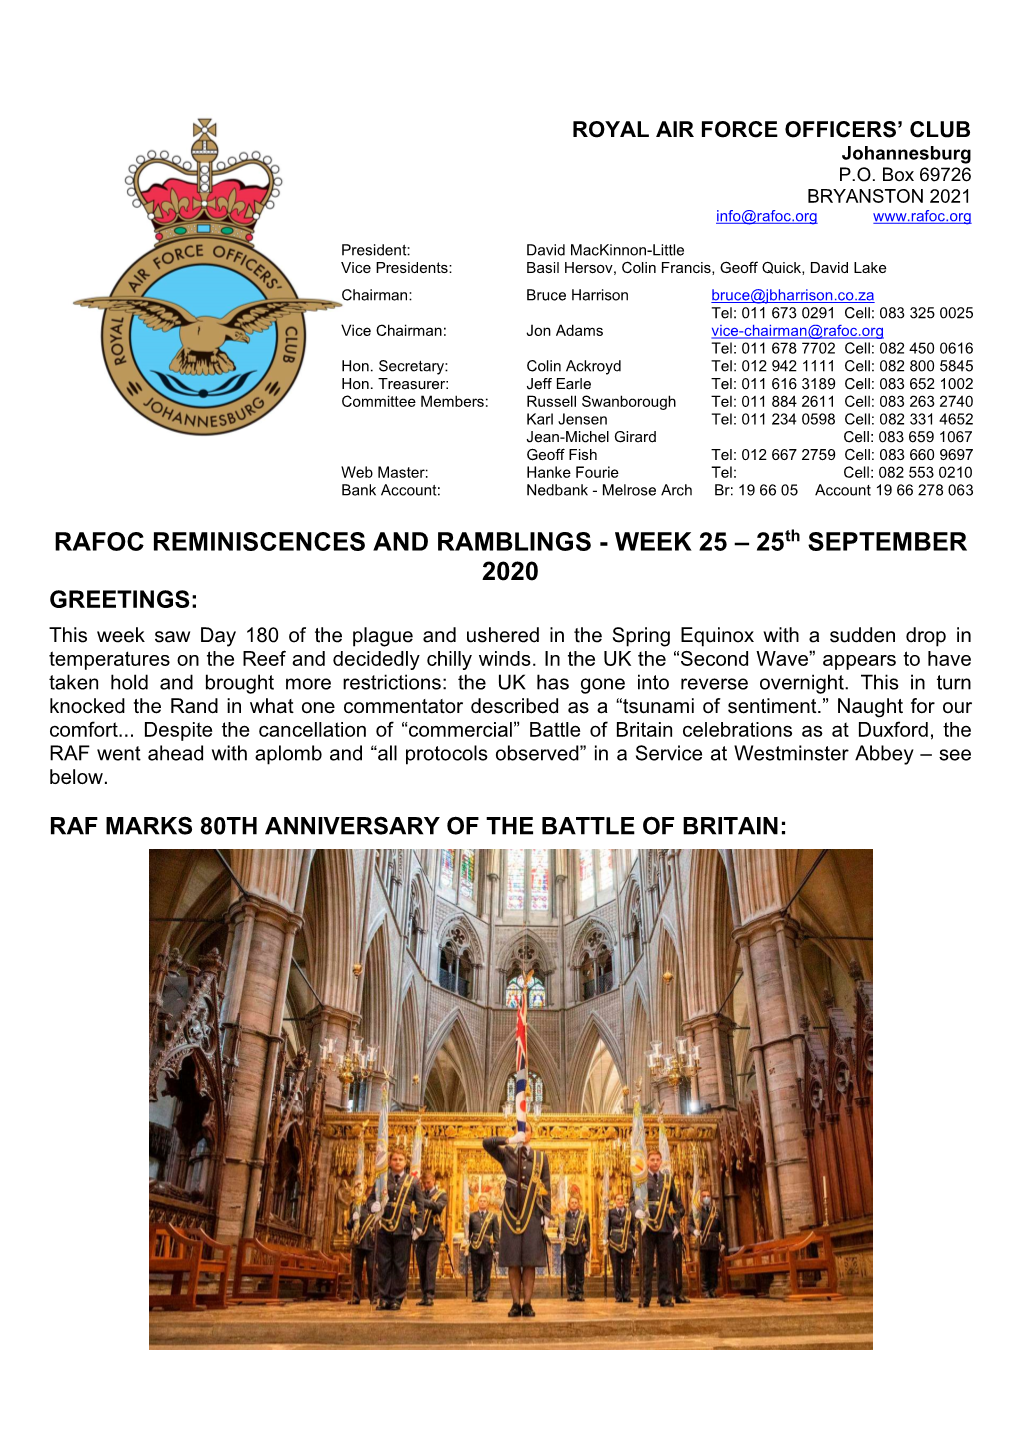 RAFOC REMINISCENCES and RAMBLINGS - WEEK 25 – 25Th SEPTEMBER 2020 GREETINGS